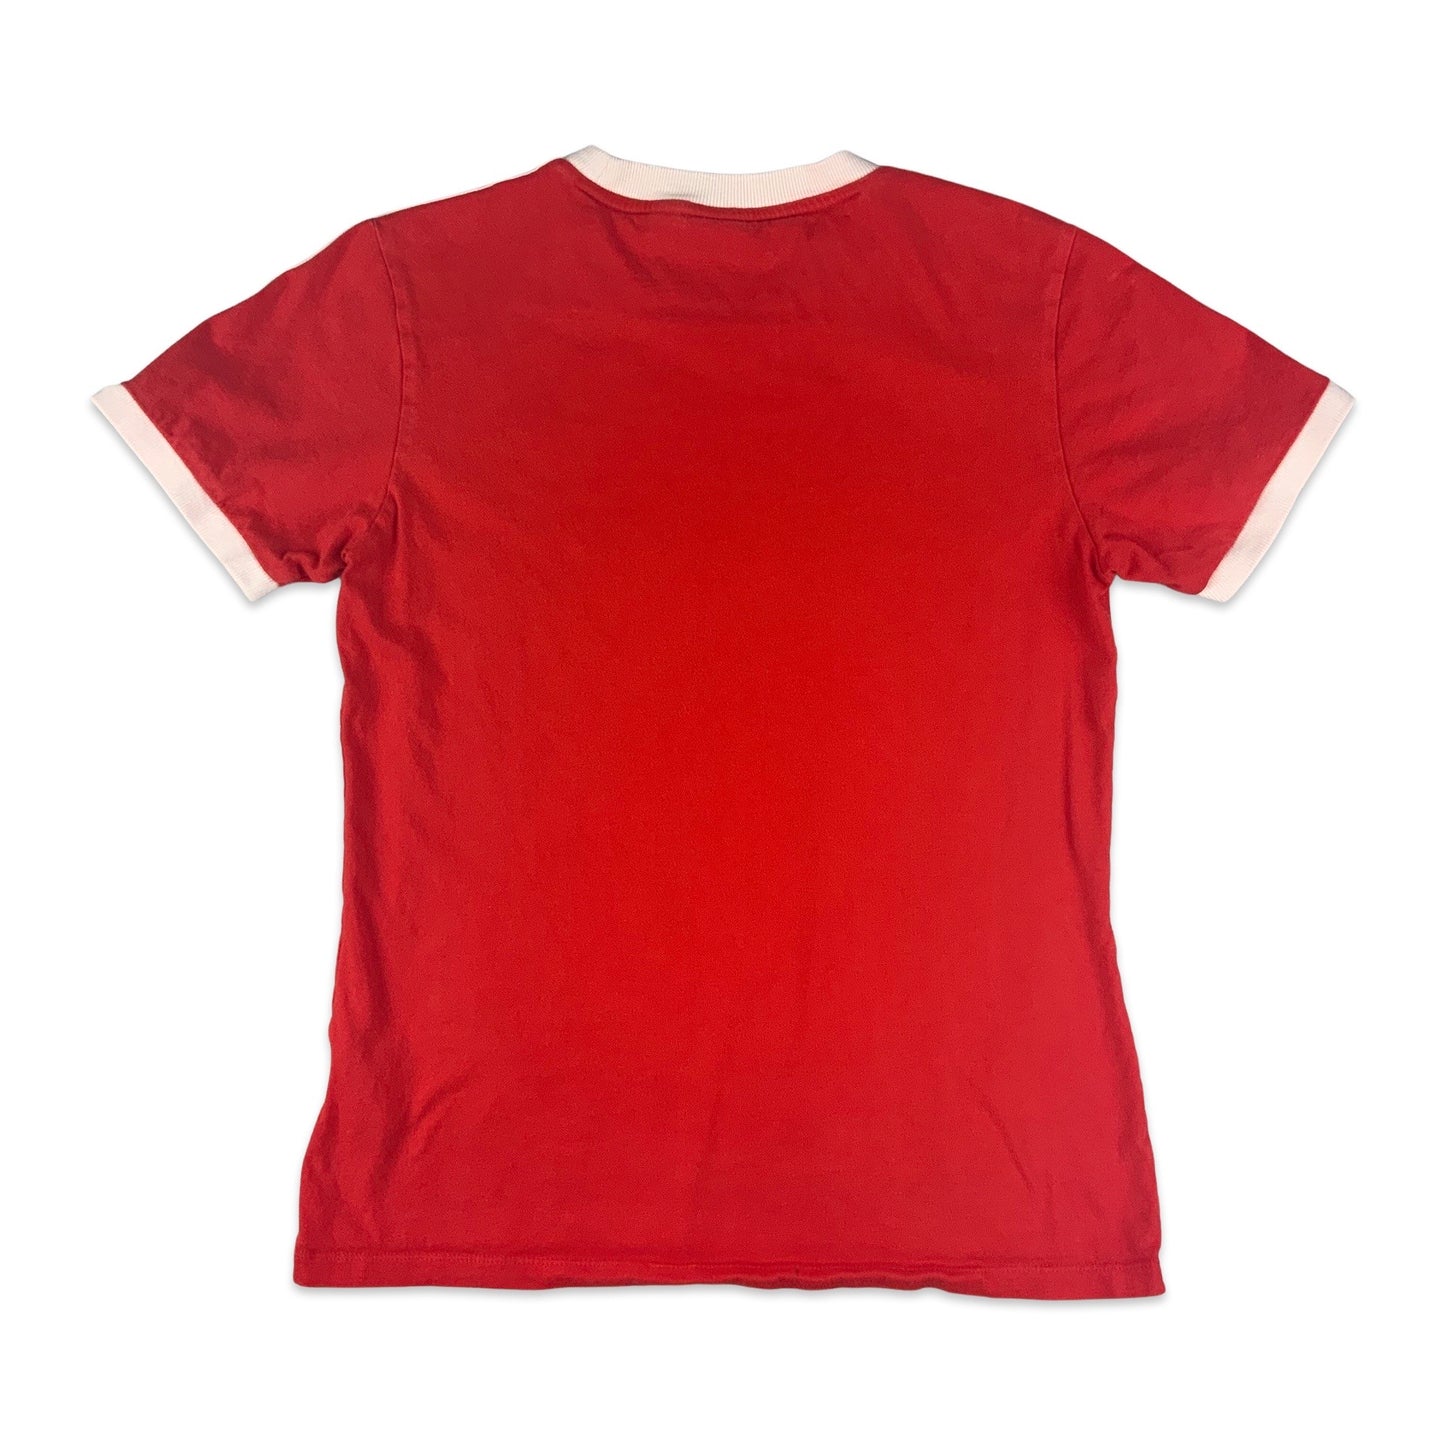 Vintage Adidas Red & White Ringer Tee T-Shirt 6 8